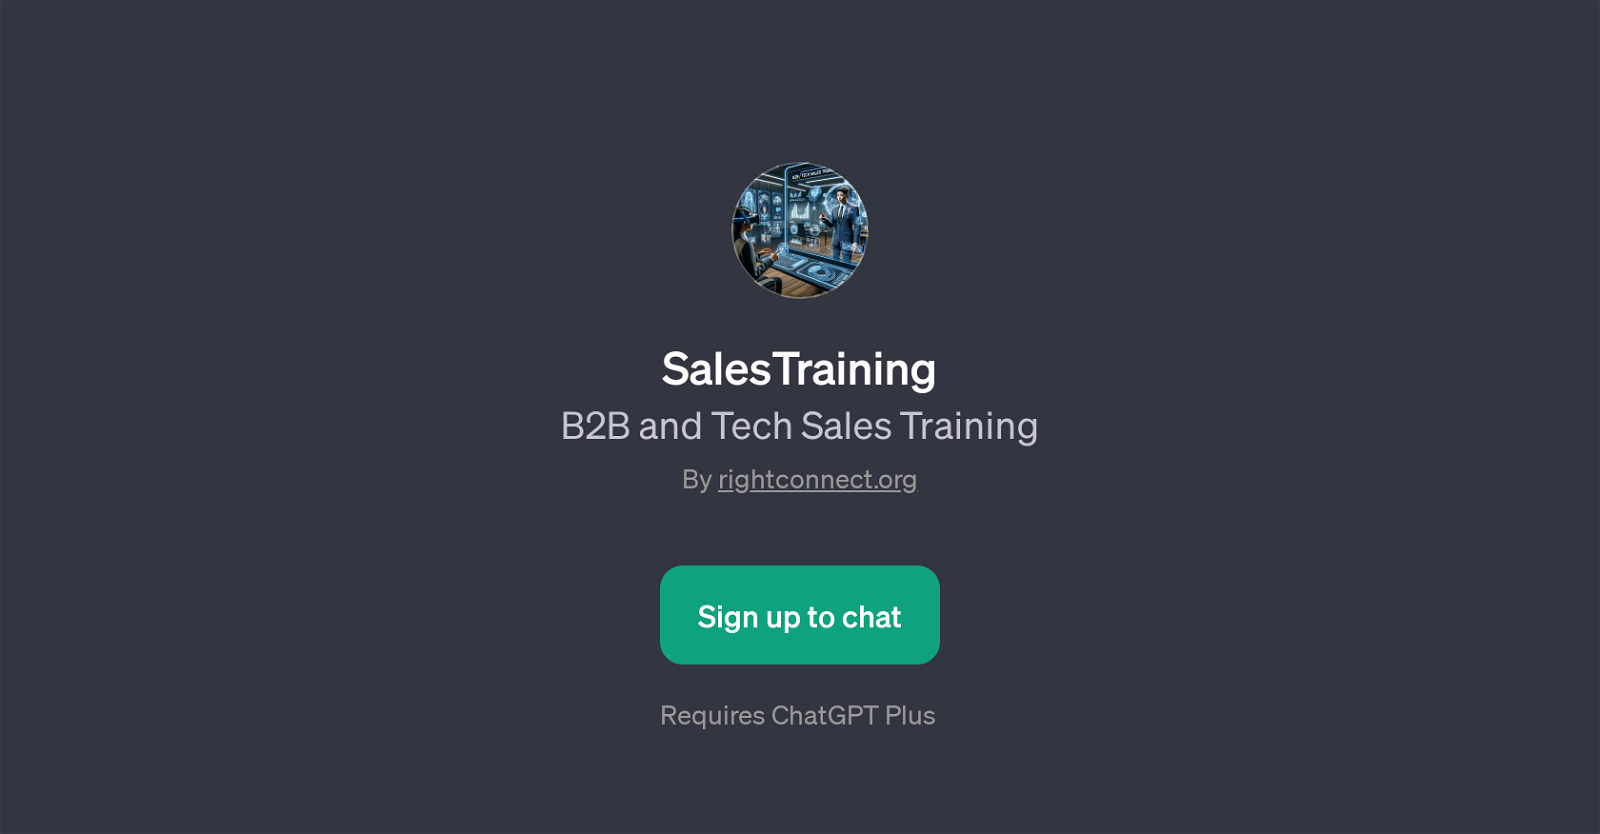 SalesTraining website